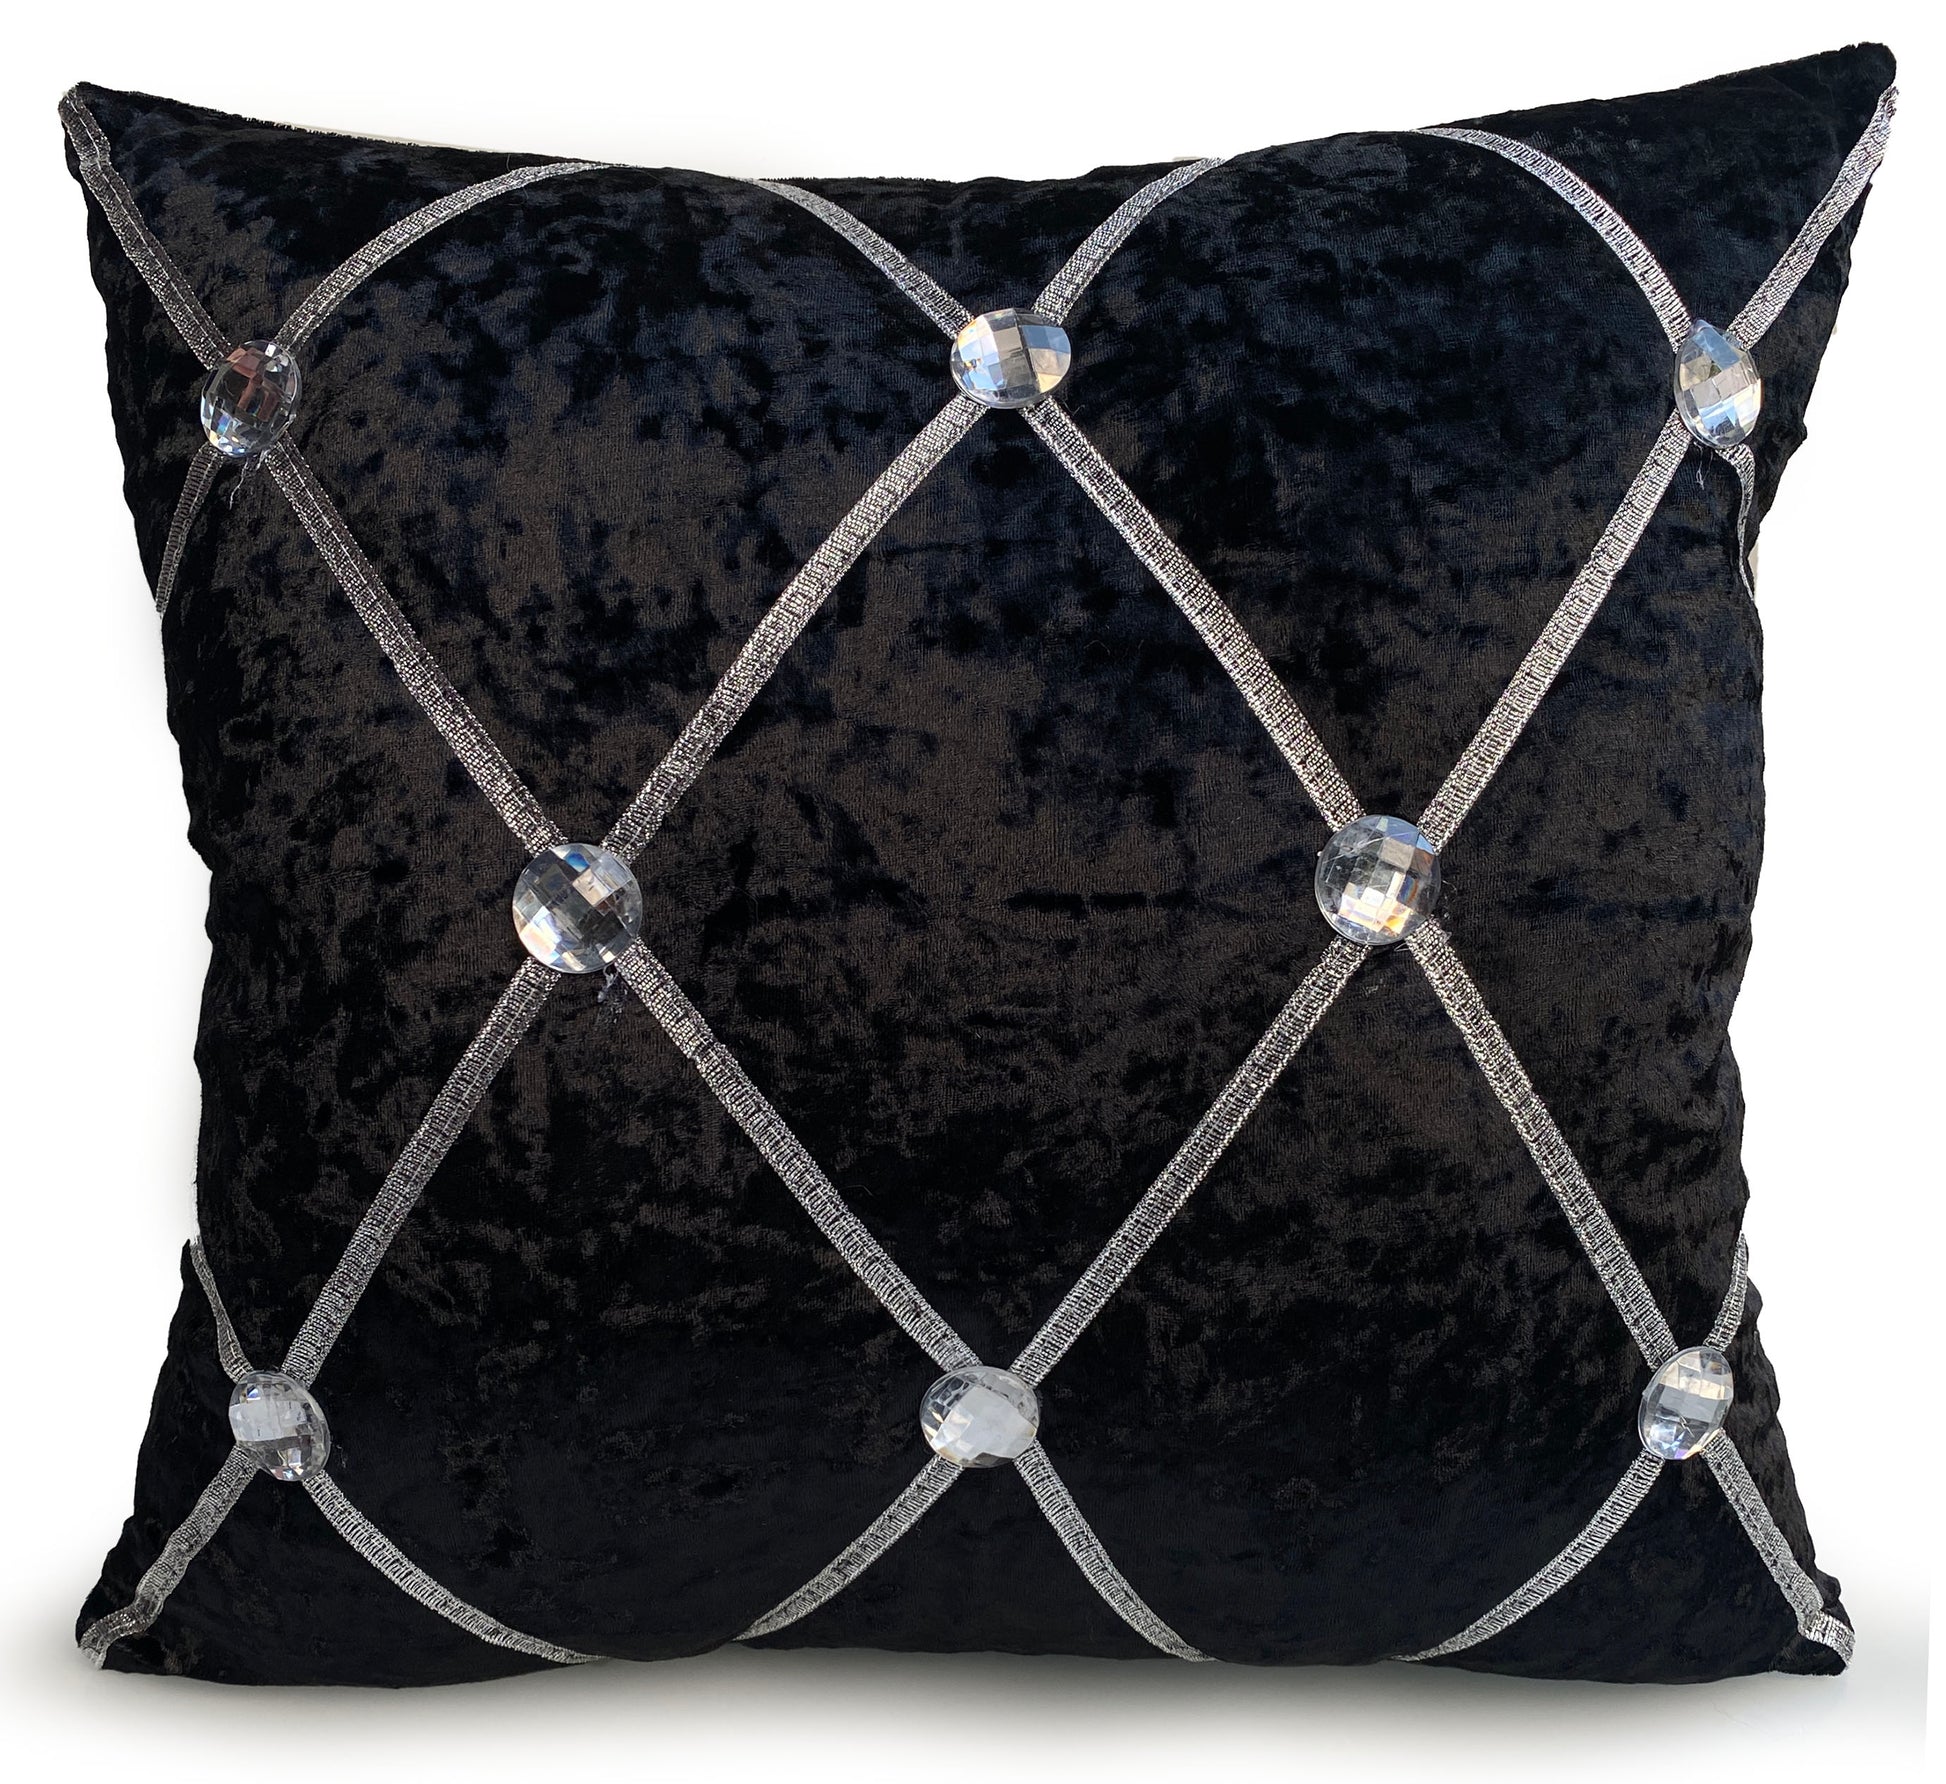 Large Crush Velvet Diamante Chesterfield Cushions or Covers Black